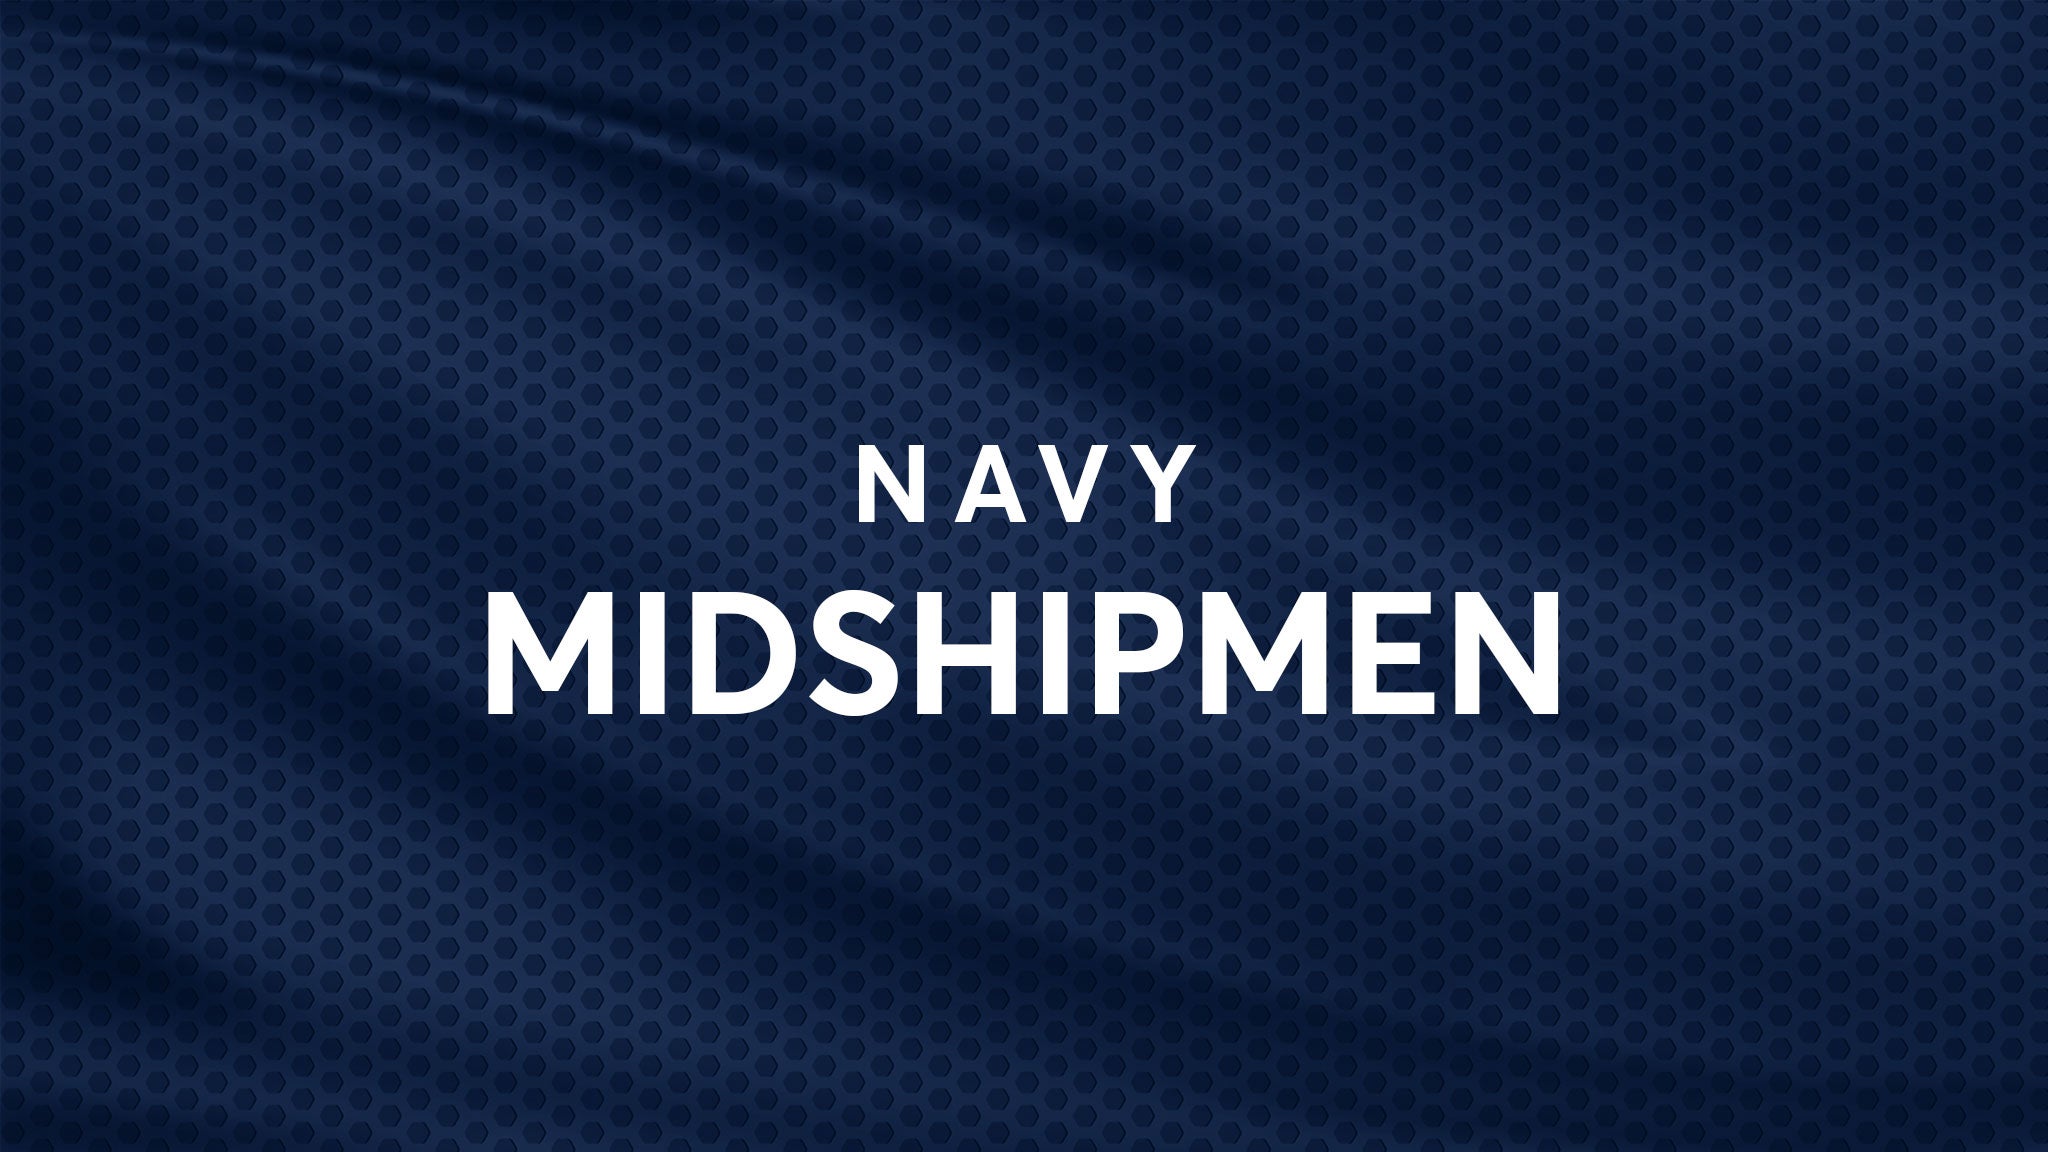 Navy Midshipmen Football vs. Tulane Green Wave Football hero